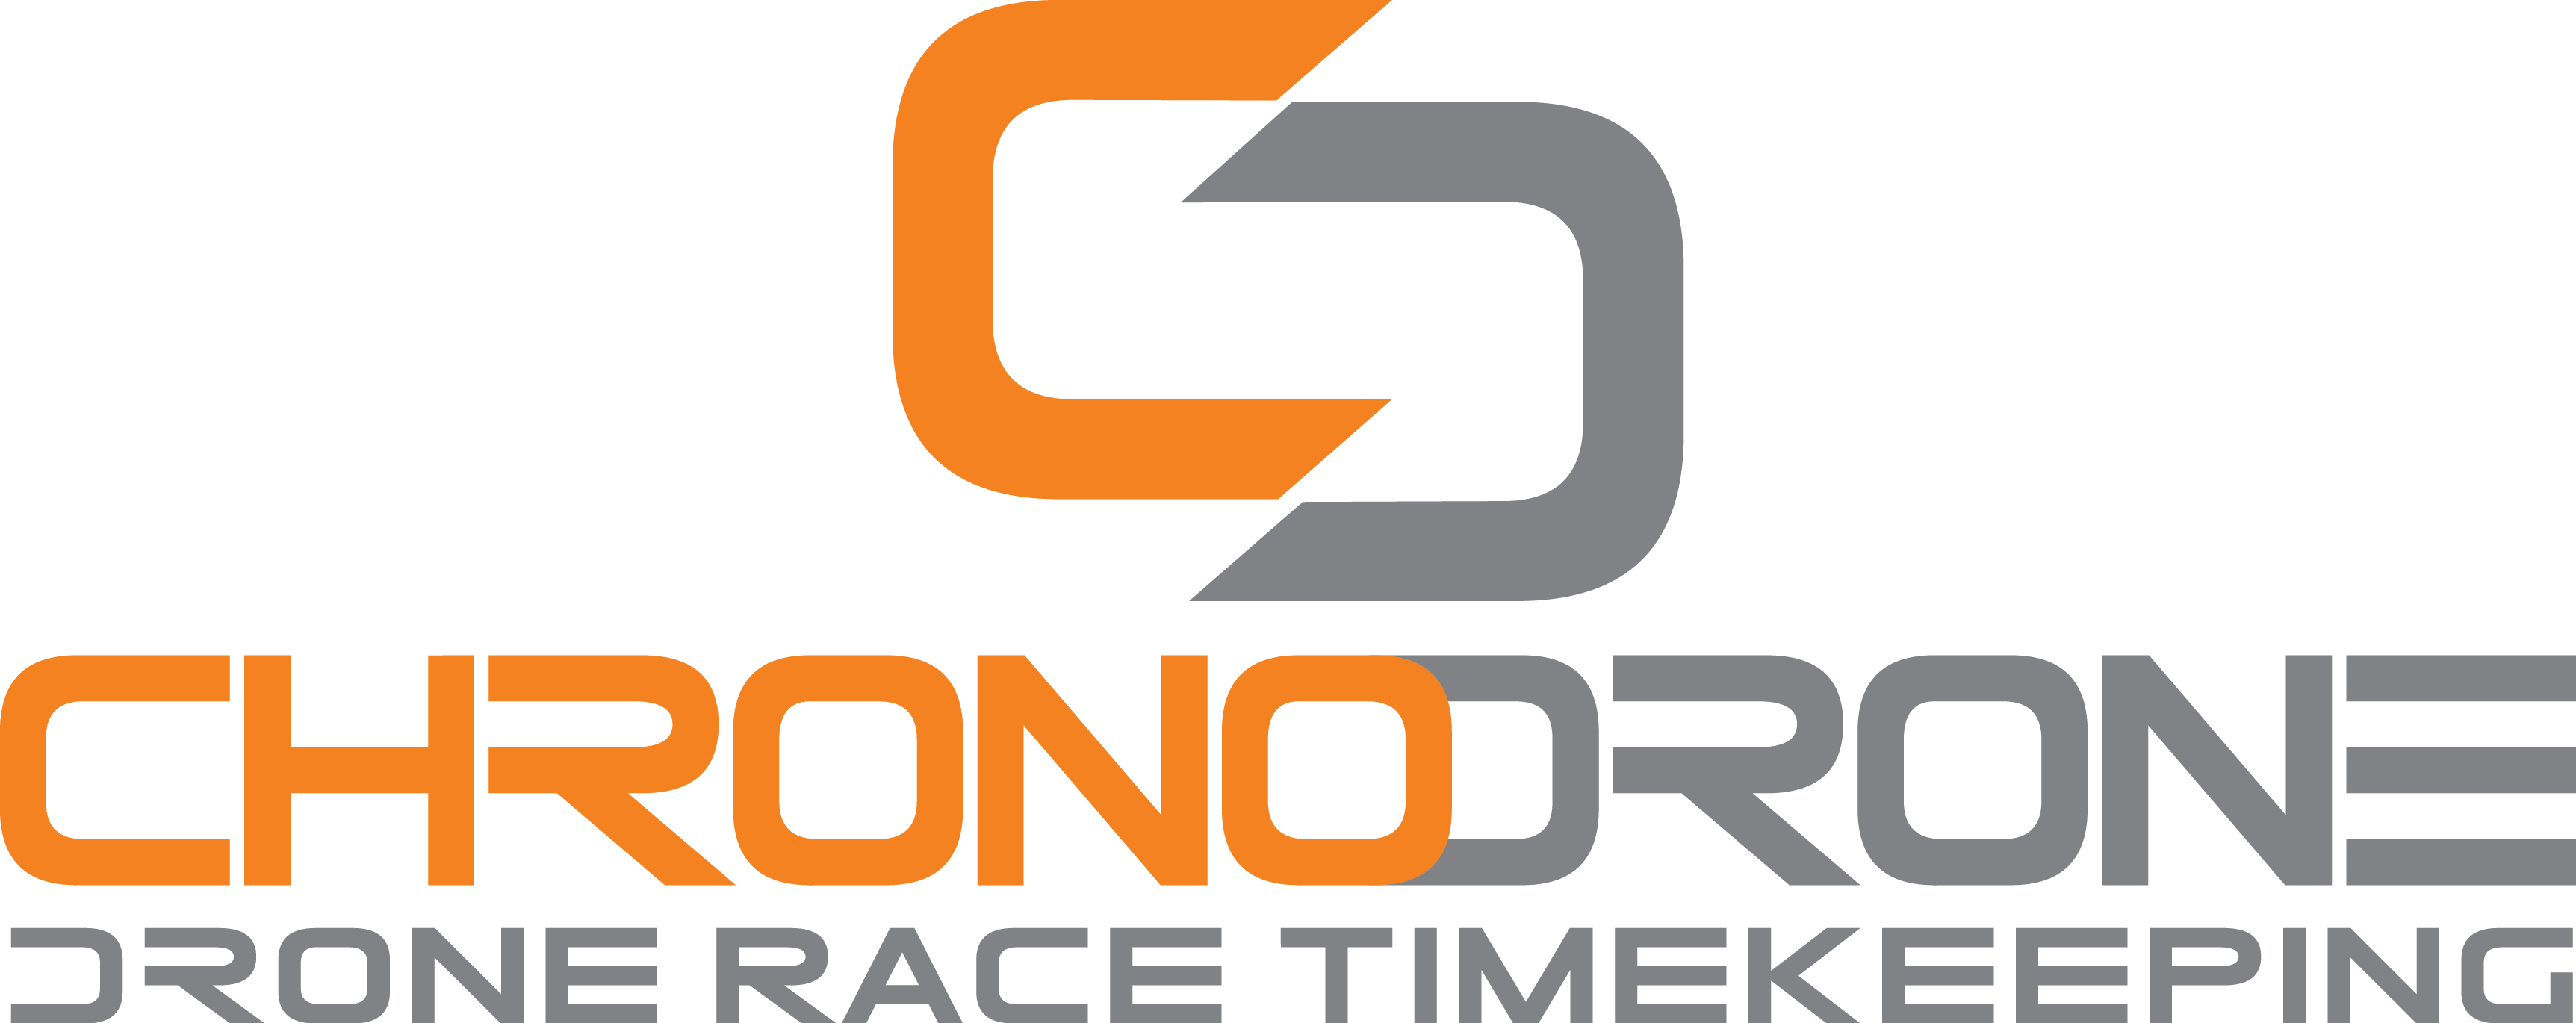 chronodrone logo